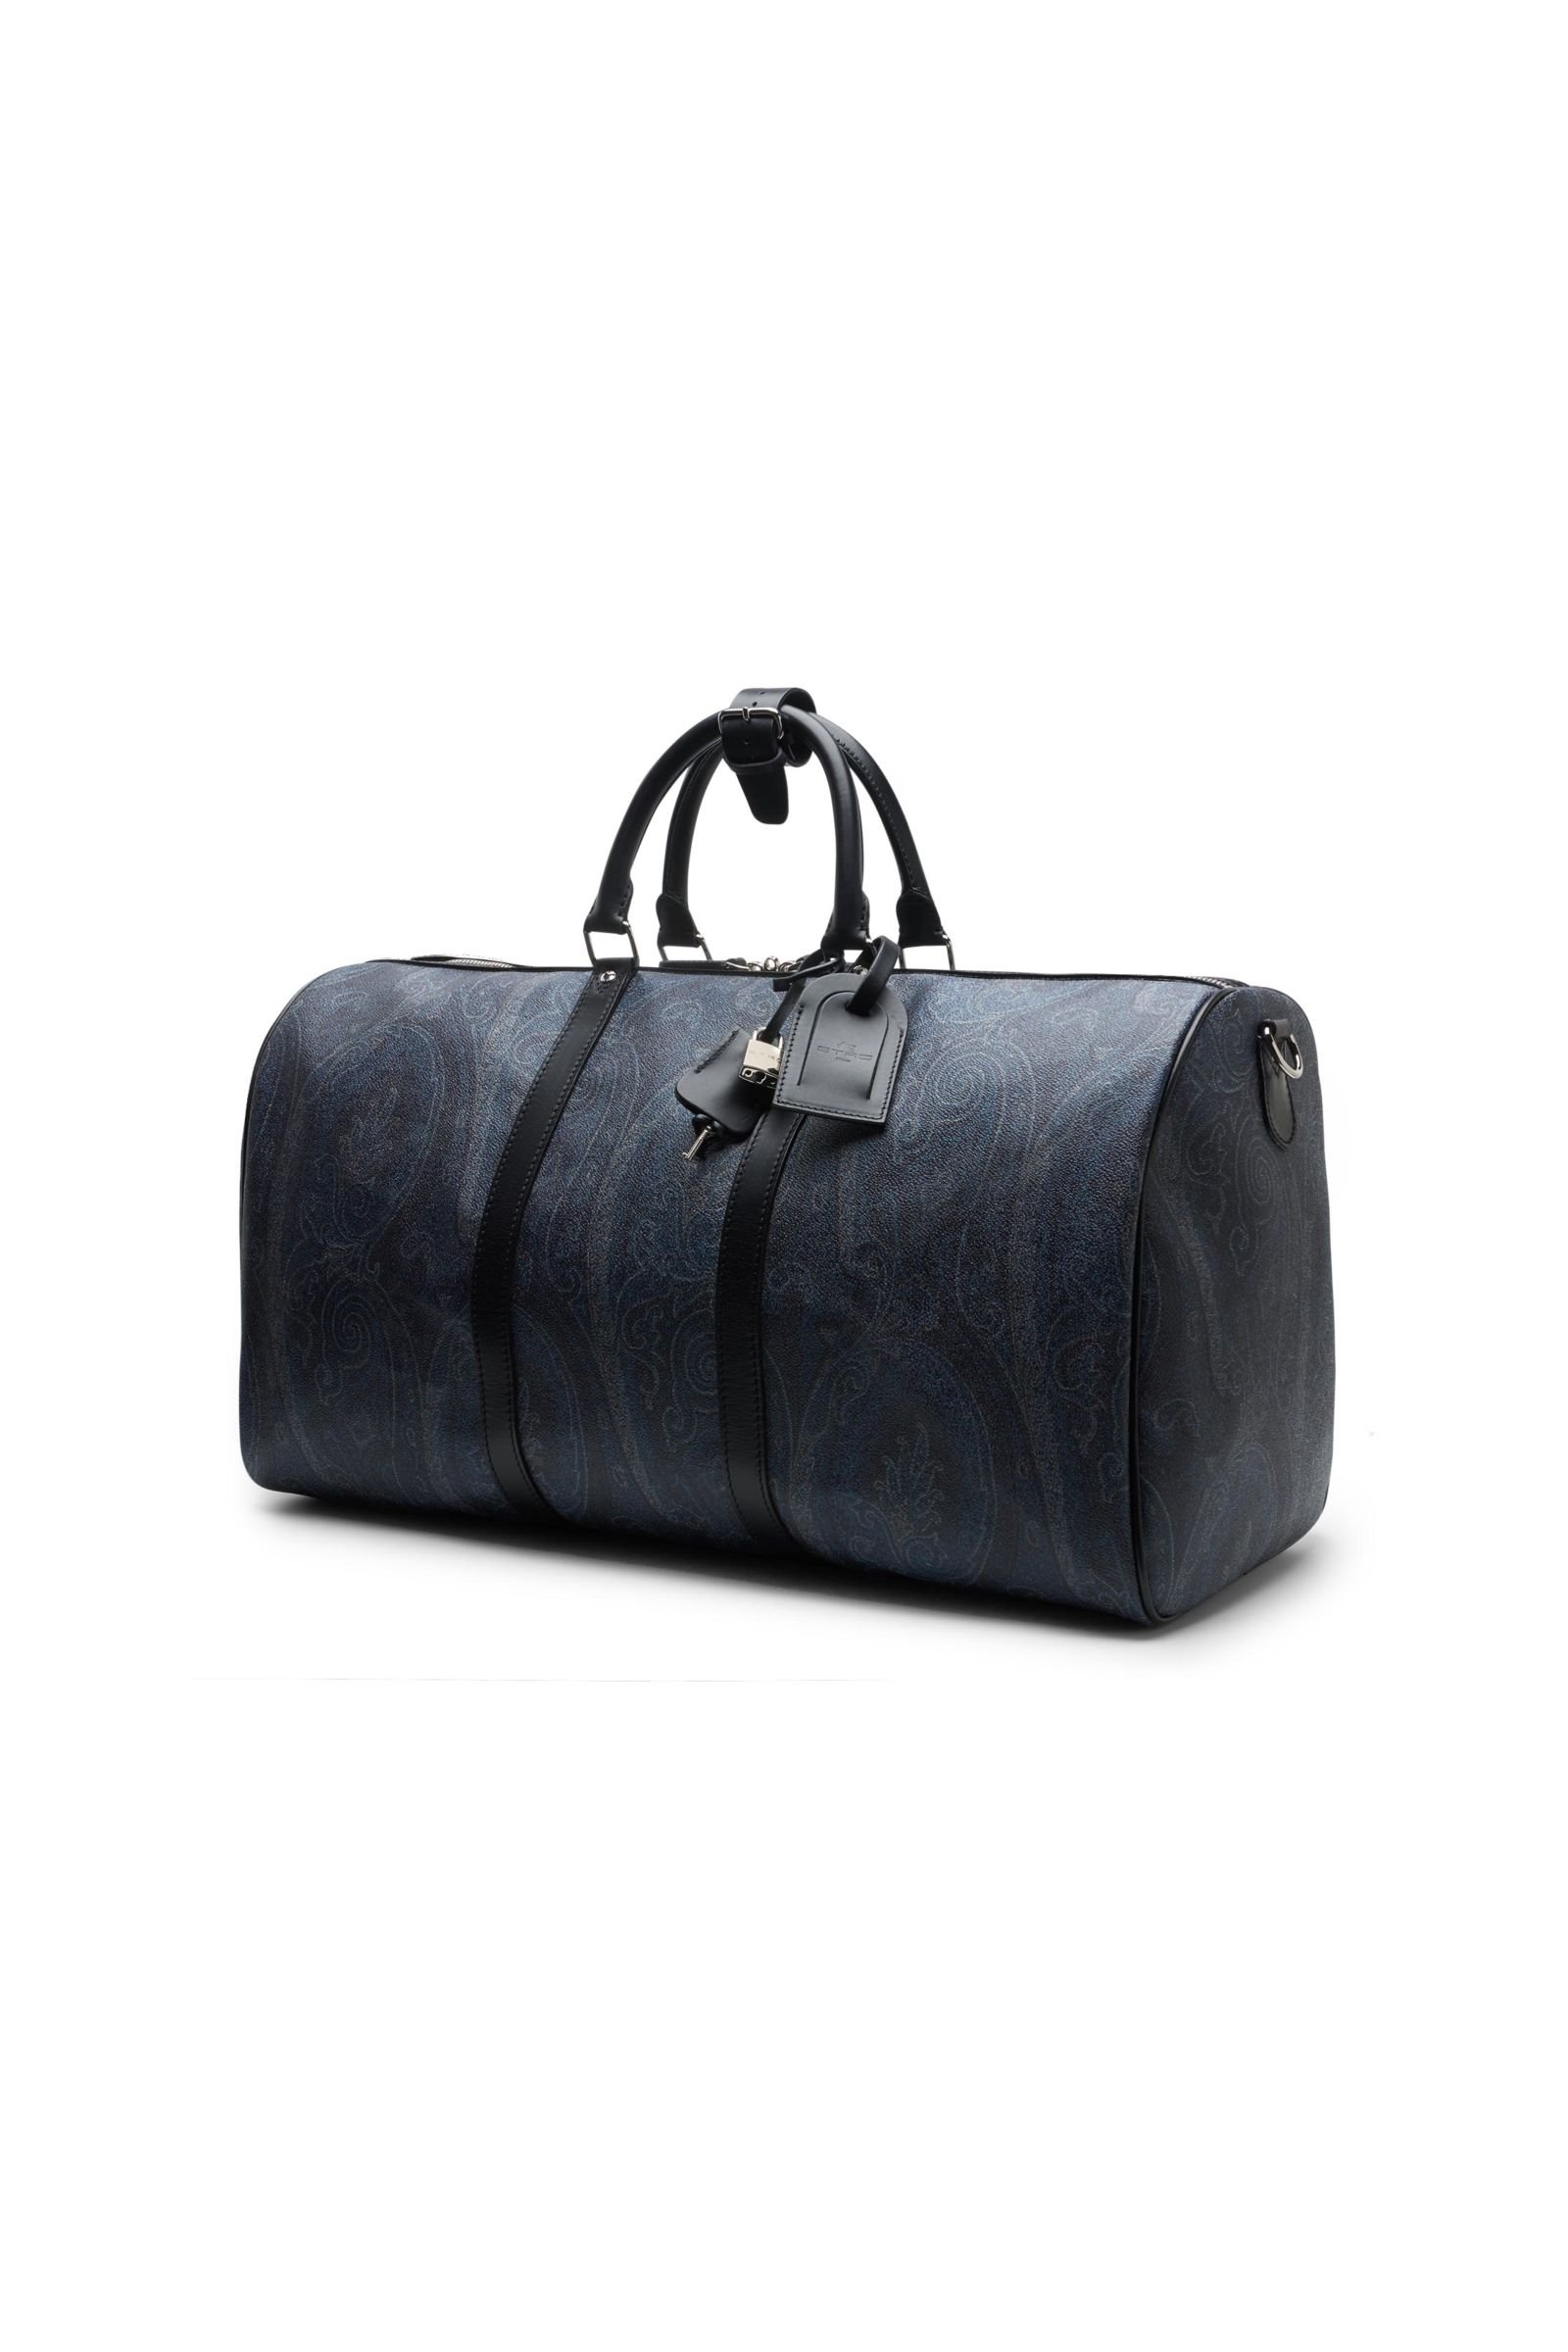 Travel bag dark navy, patterned